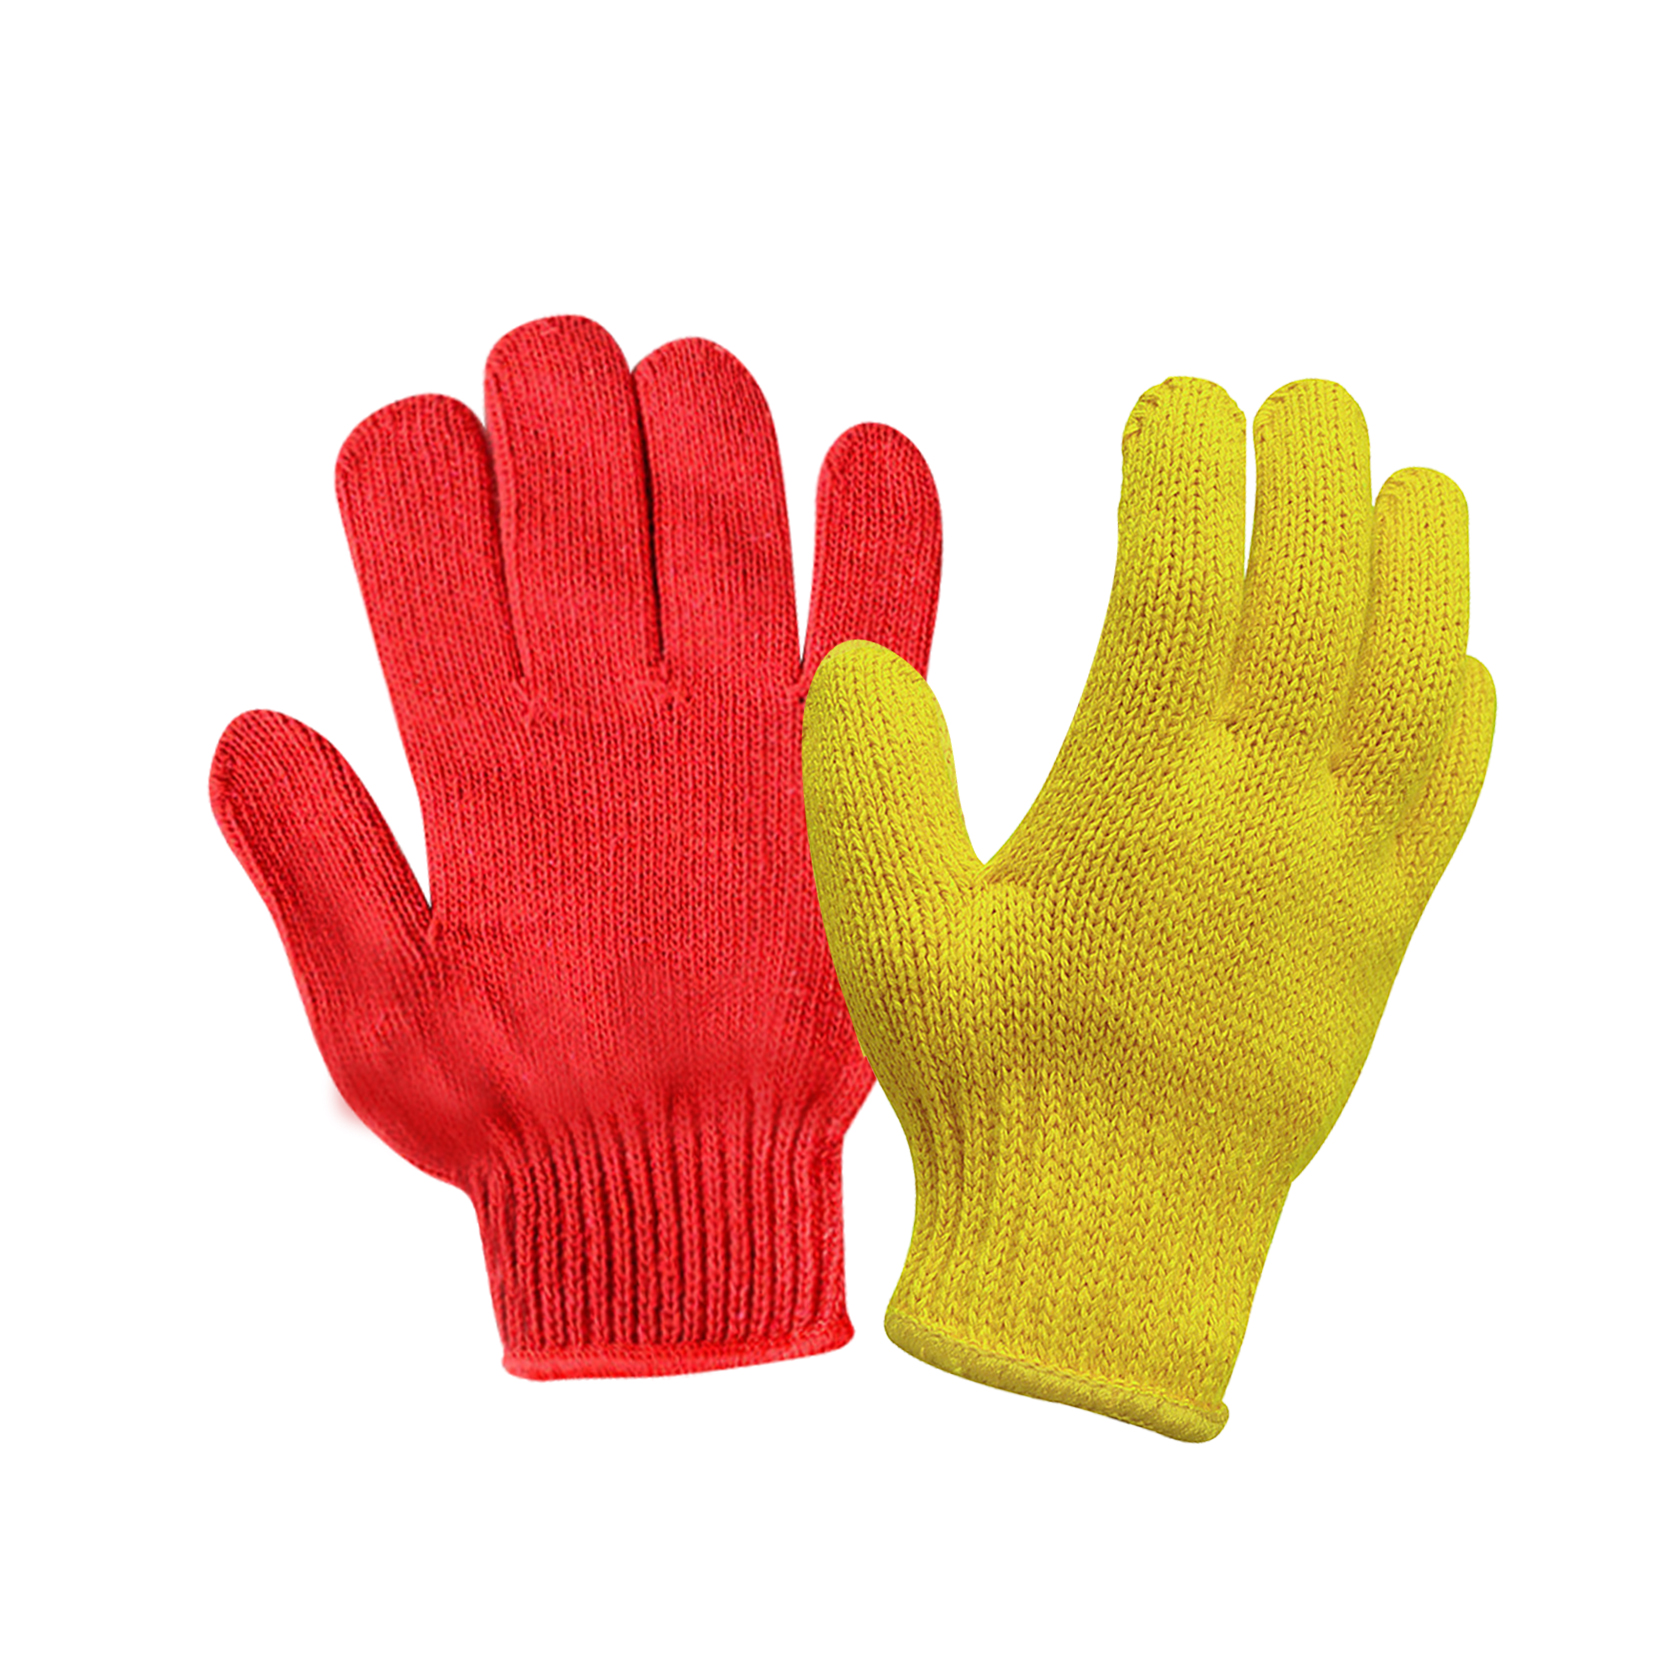 Labor Protection Gloves Cotton Yarn Cotton Thread Nylon Wear-Resistant Gloves